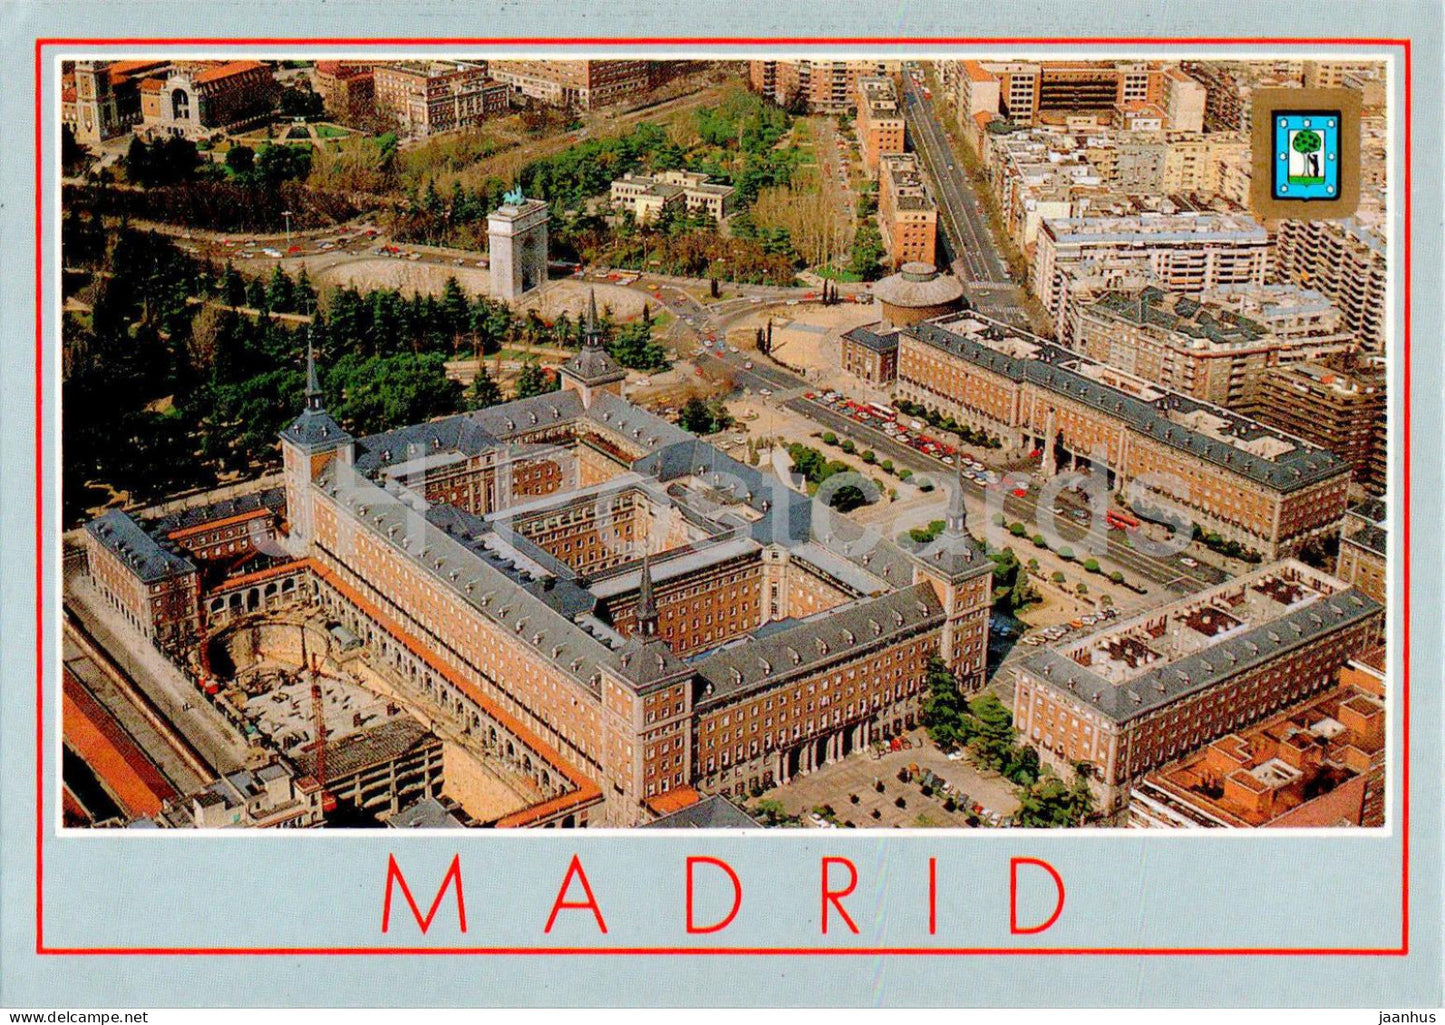 Madrid - Ministerio del Aire y Arco de la Victoria - Air Office and Victory Arch - 63 - Spain - unused - JH Postcards